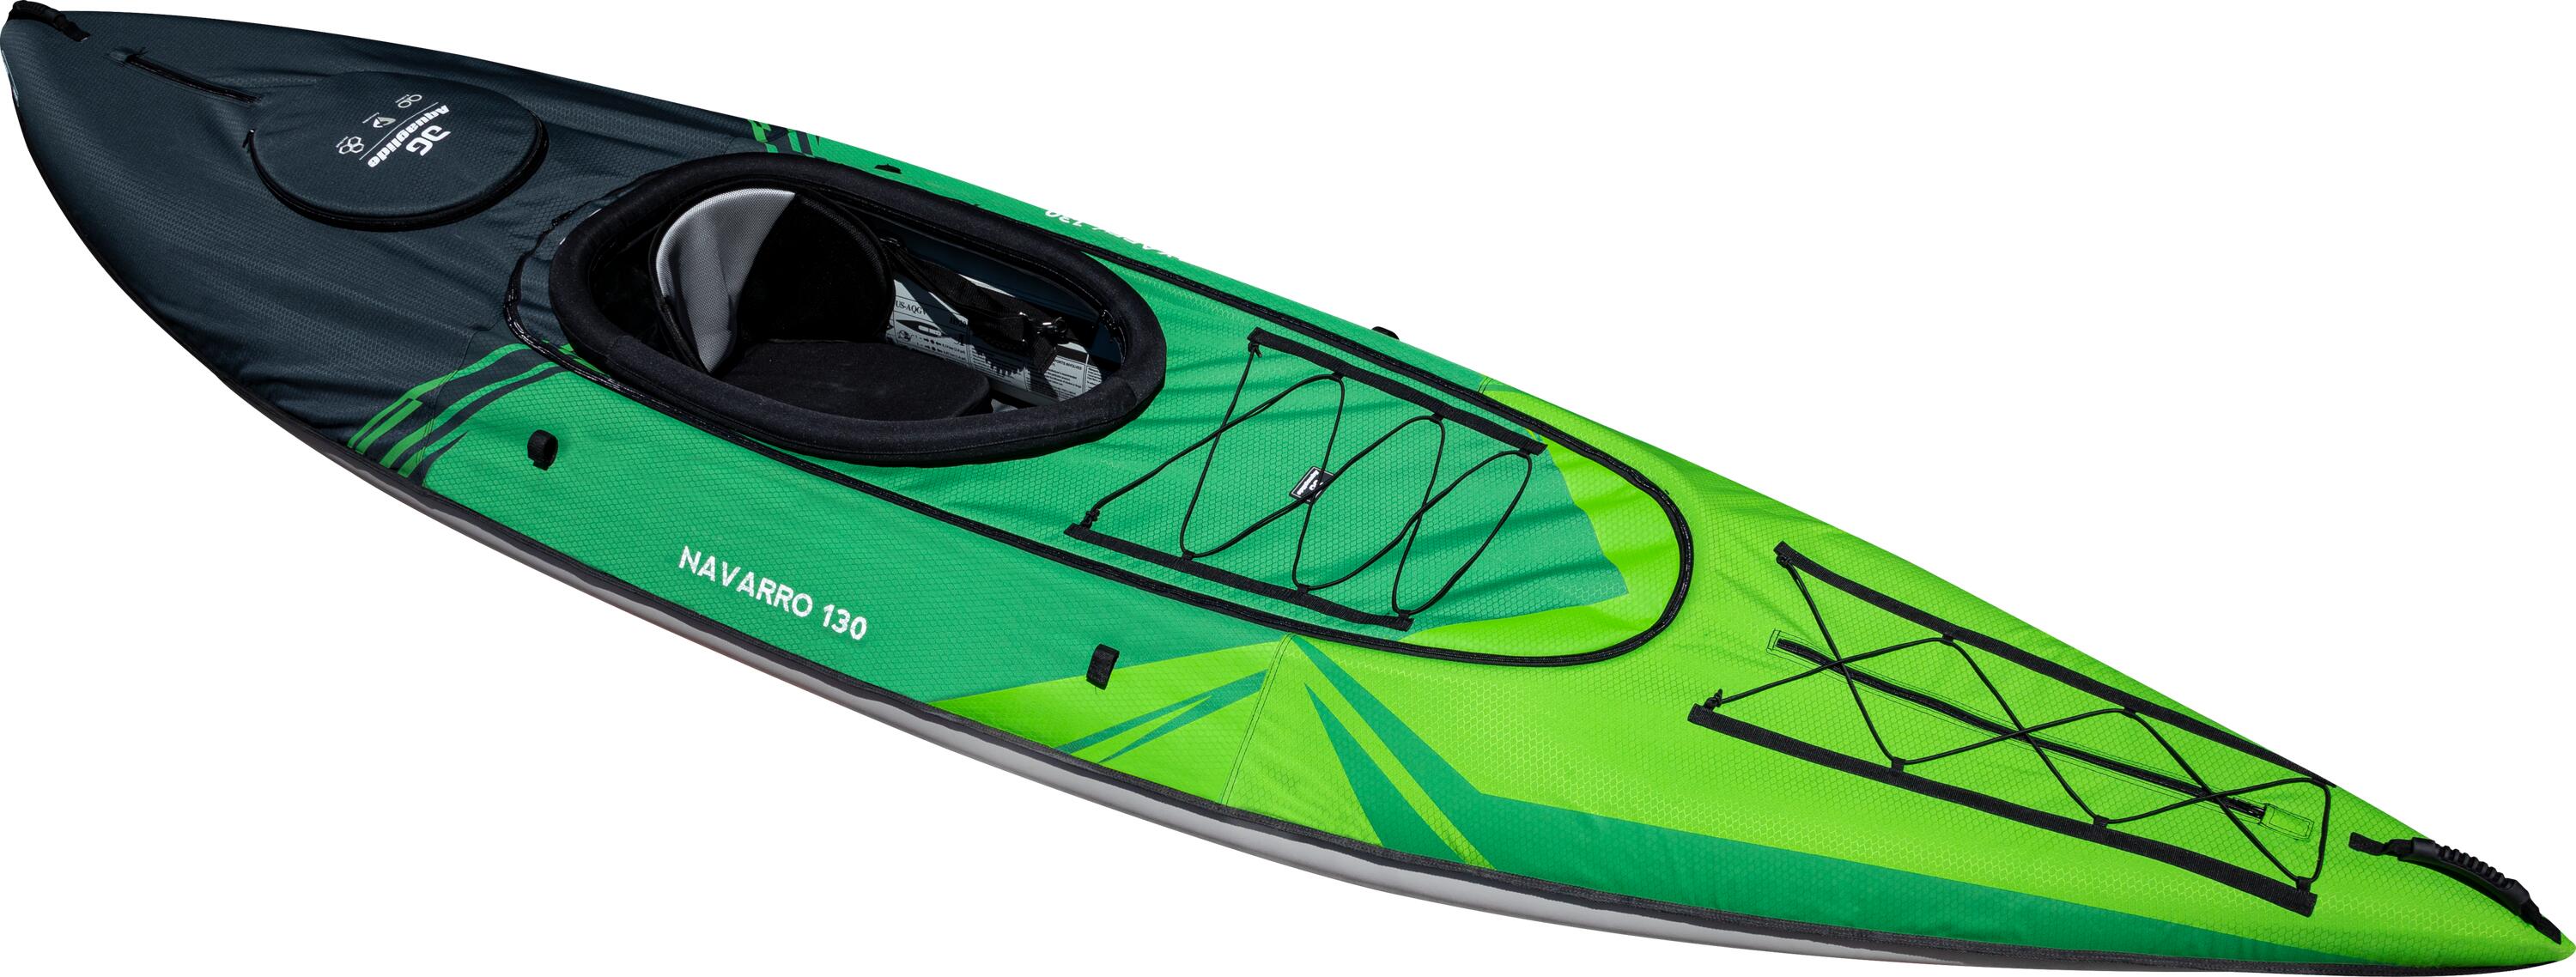 Navarro 110 1 Person Inflatable Kayak 4/5